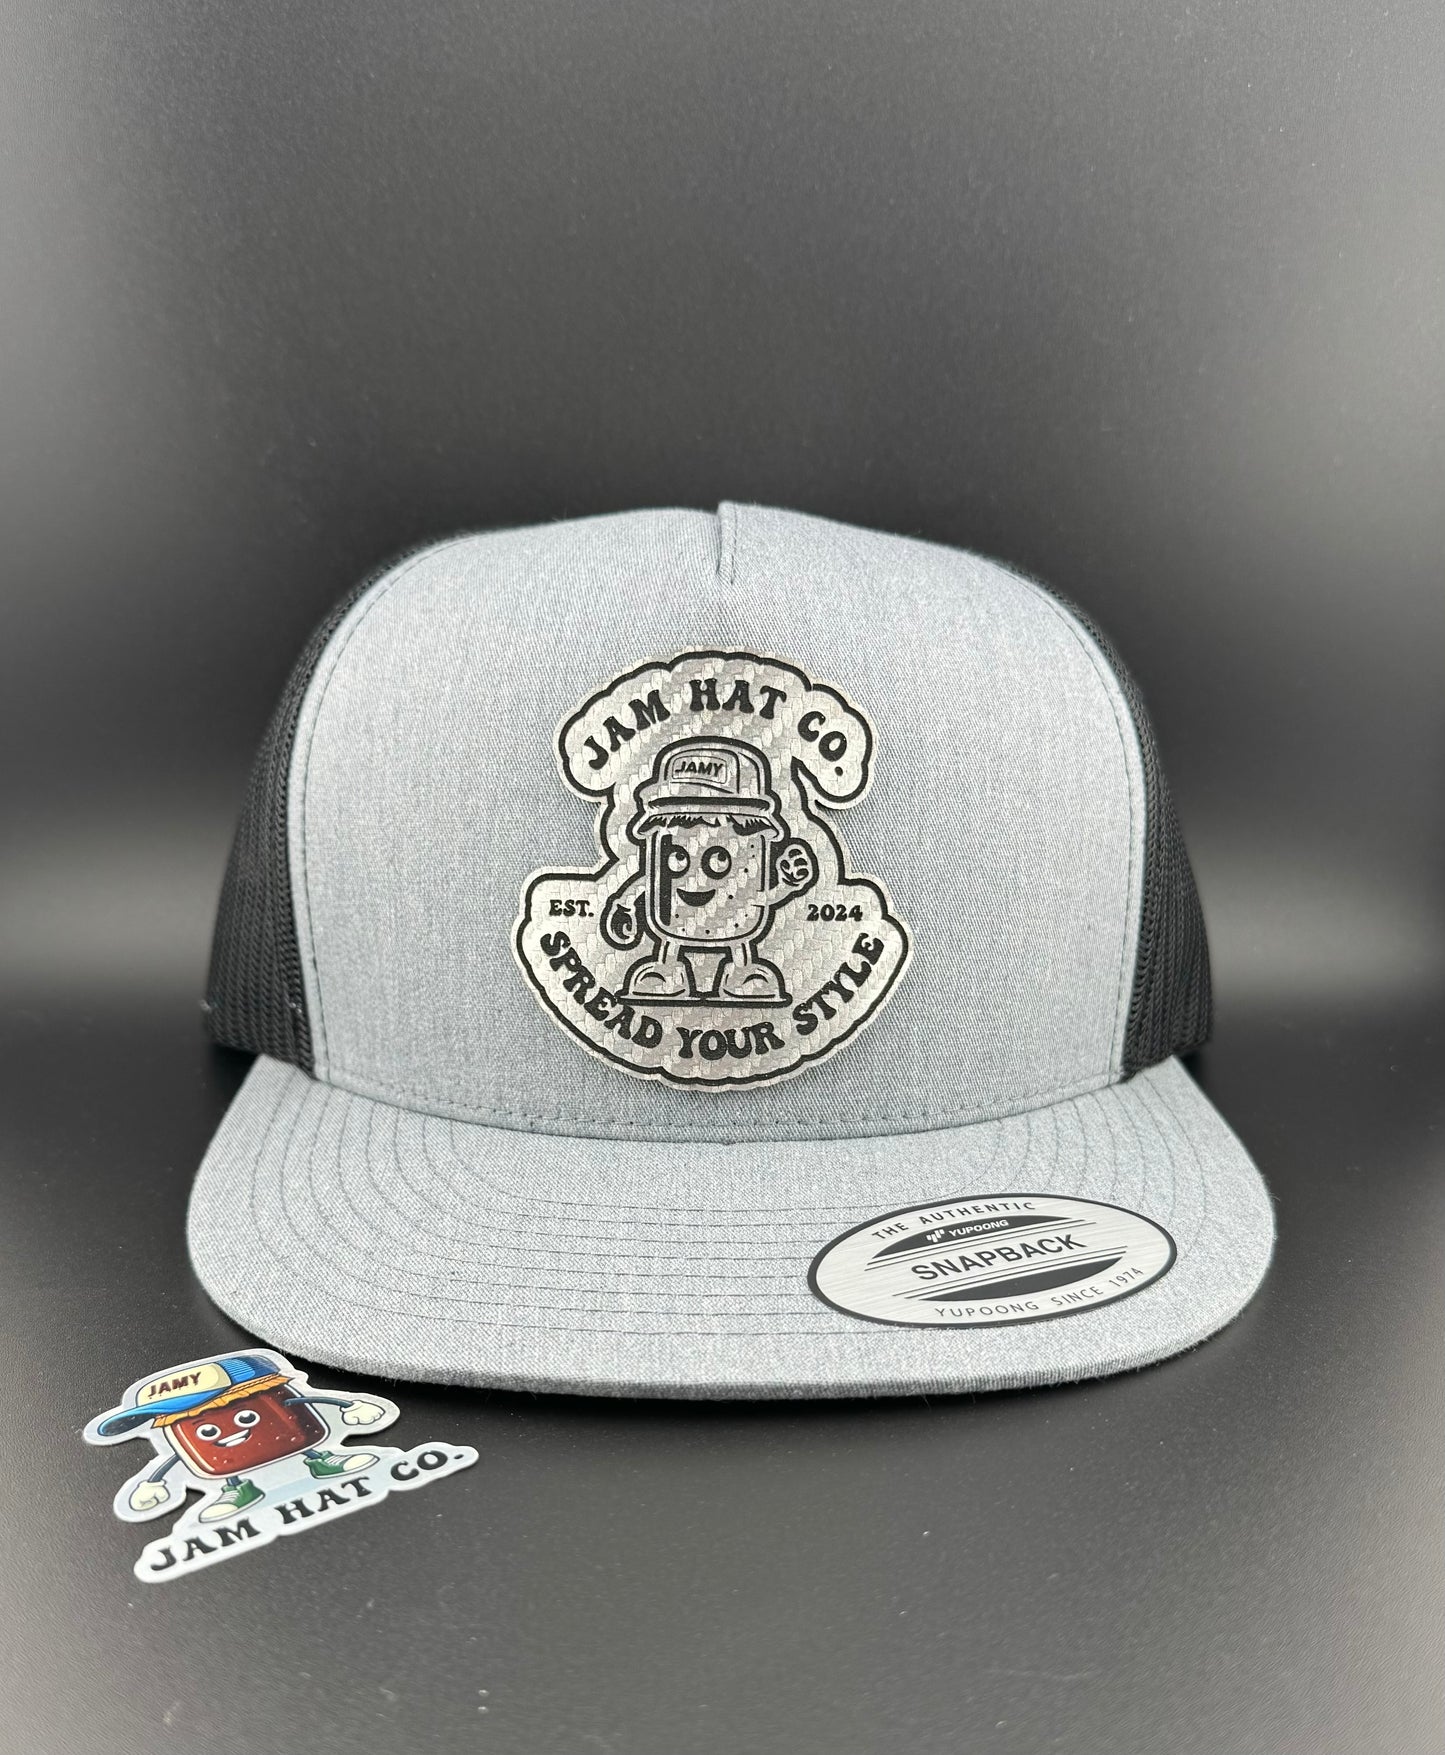 JAM Hat Co Original - Silver Collection